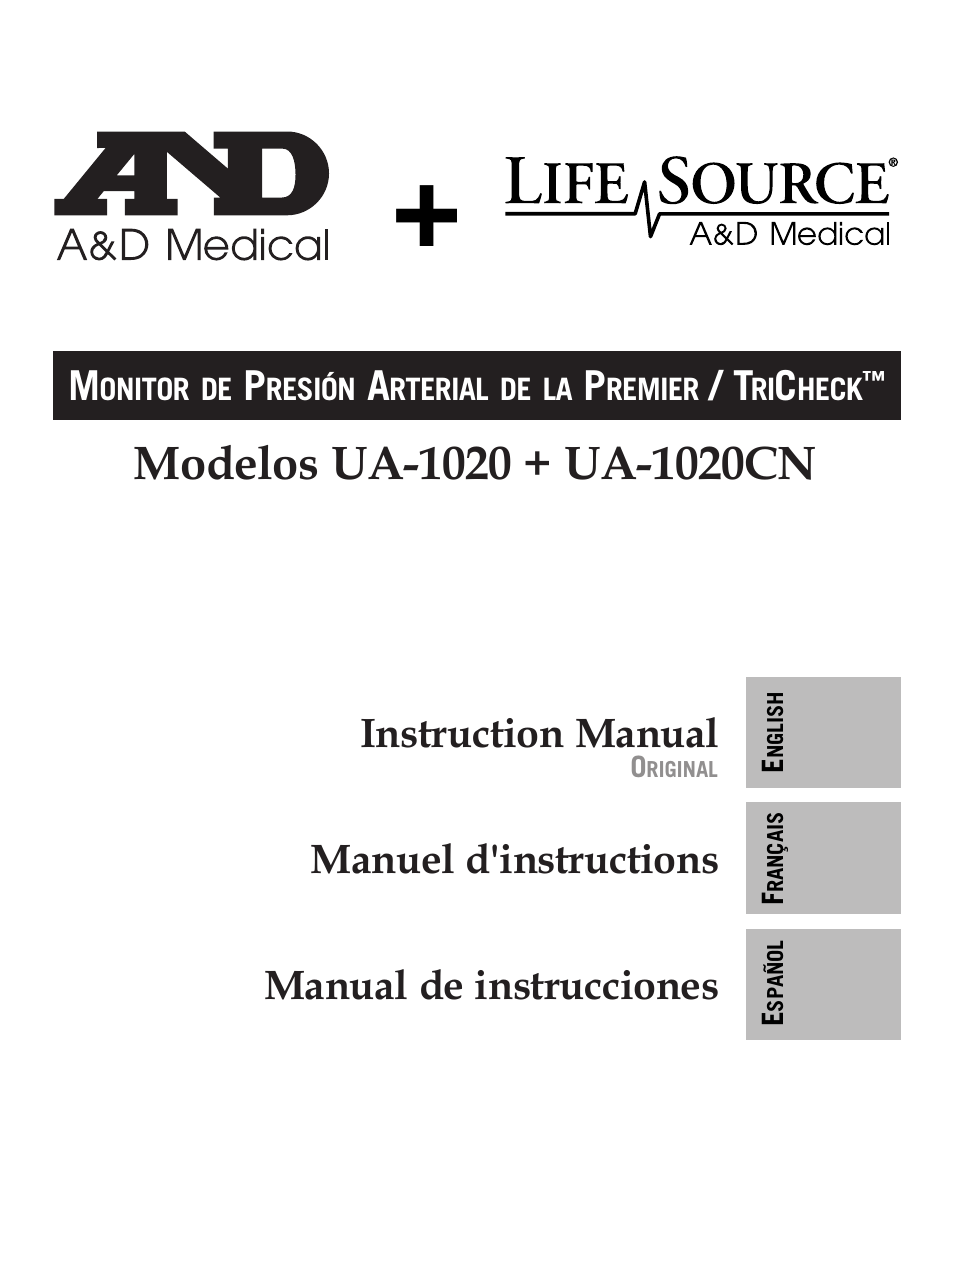 Premier/TriCheck Blood Pressure MOnitor UA-1020 (Page 67)